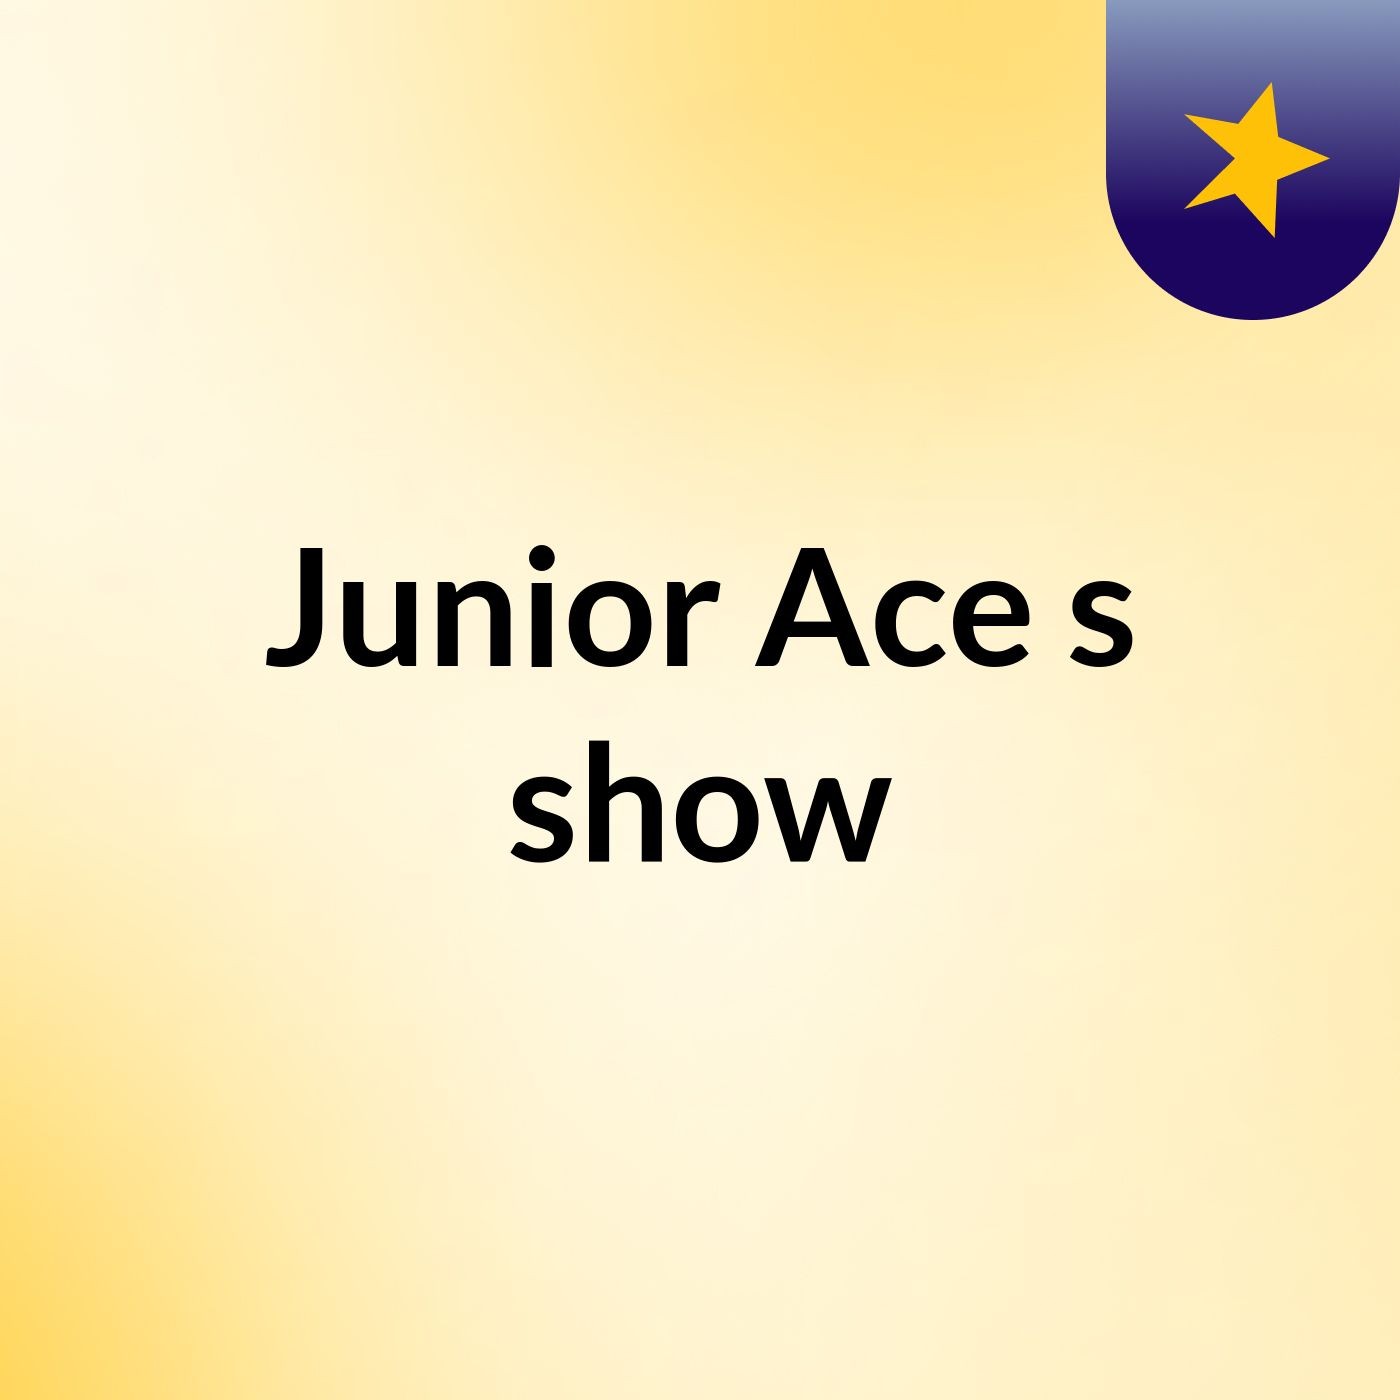 Junior Ace's show